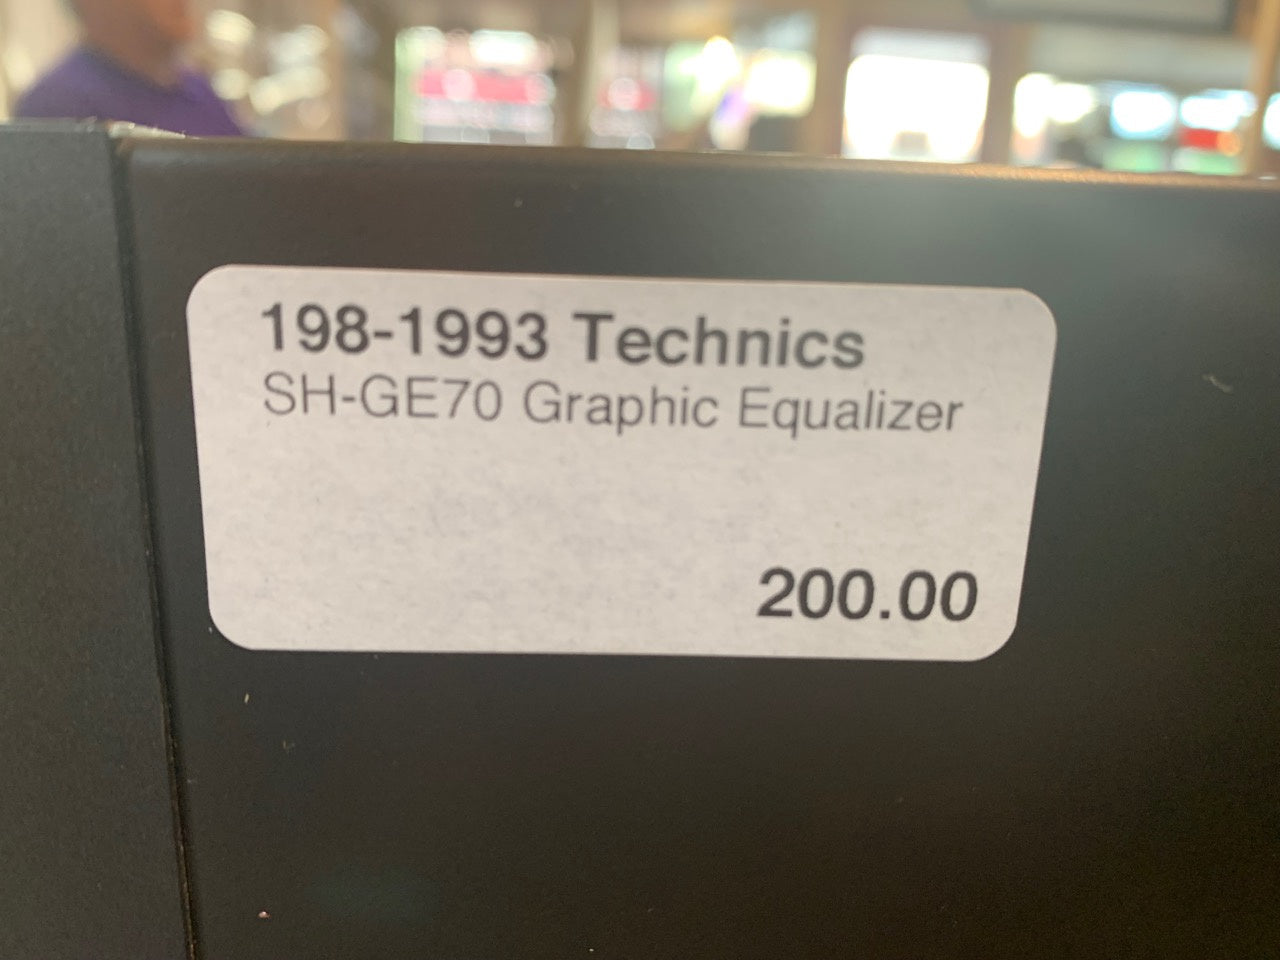 Technics SH-GE70 Graphic Equalizer with Spectrum Analyzer